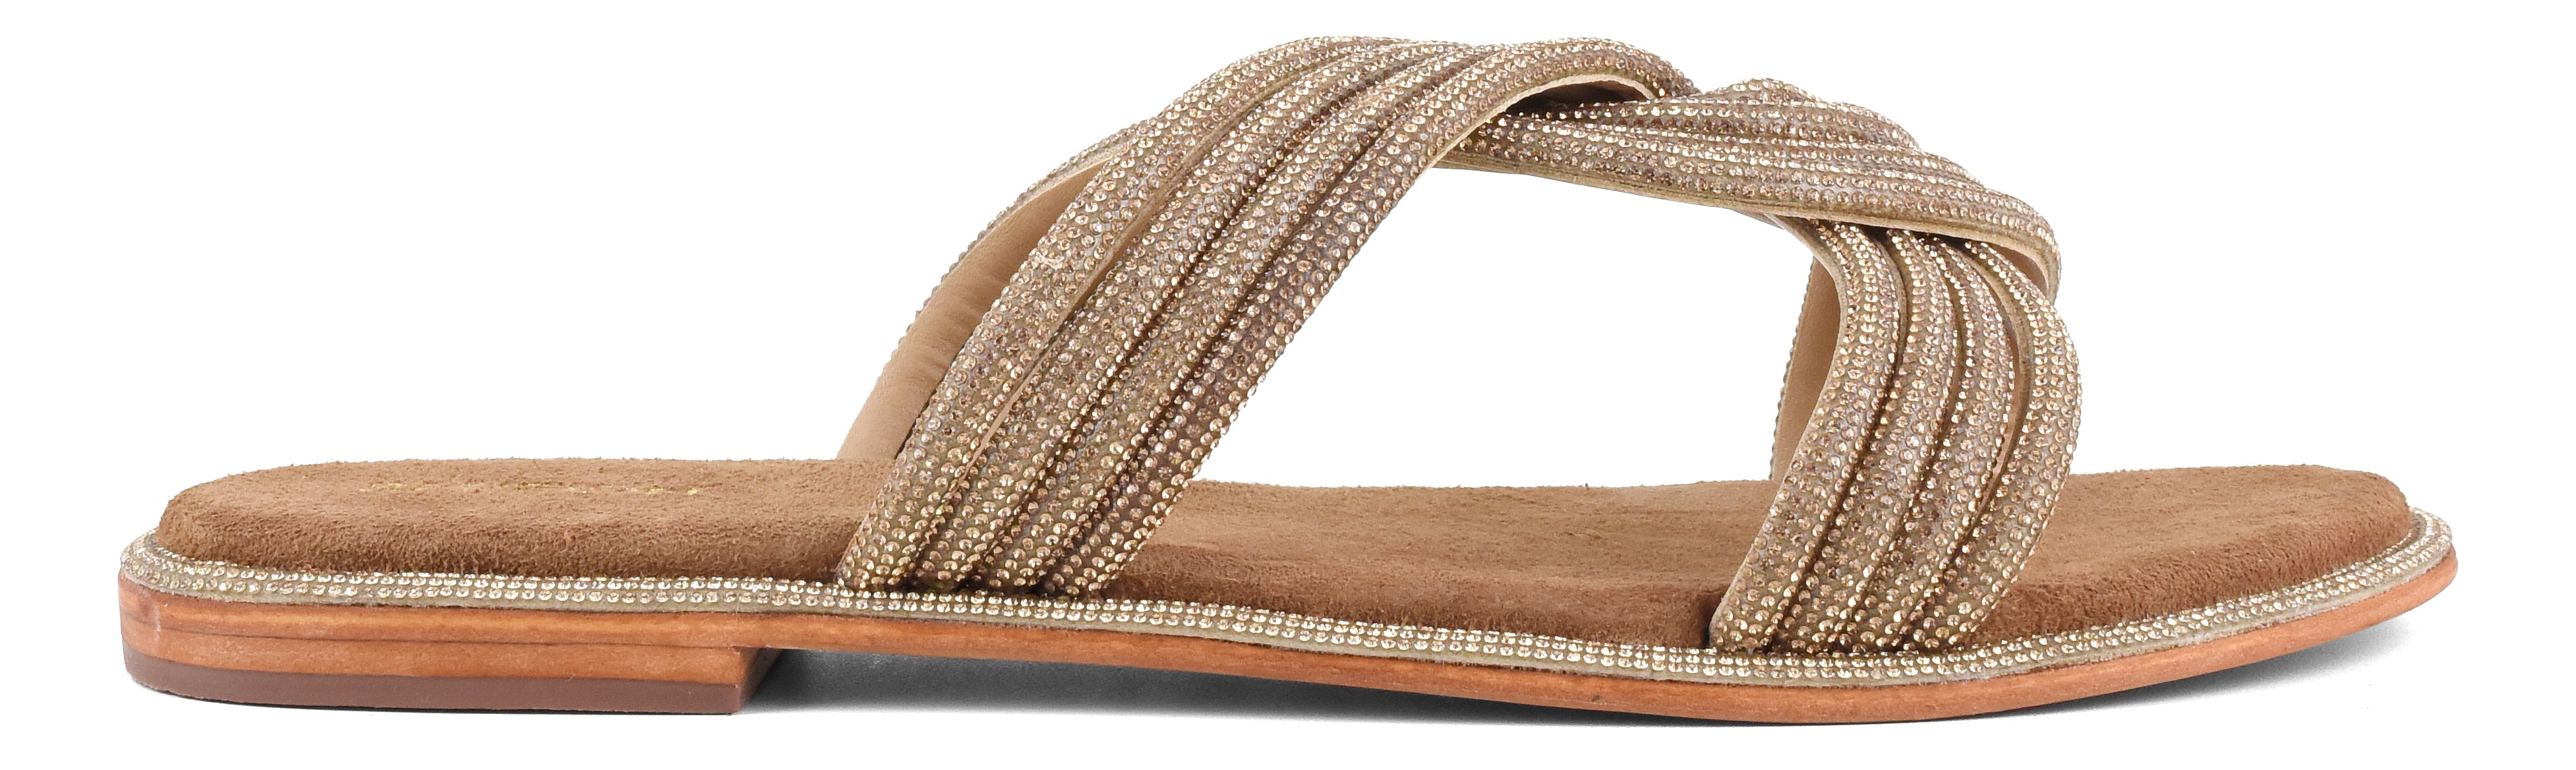 CORAL BLUE Sandalo Donna Fascia Nodo Strass-Pink Gold